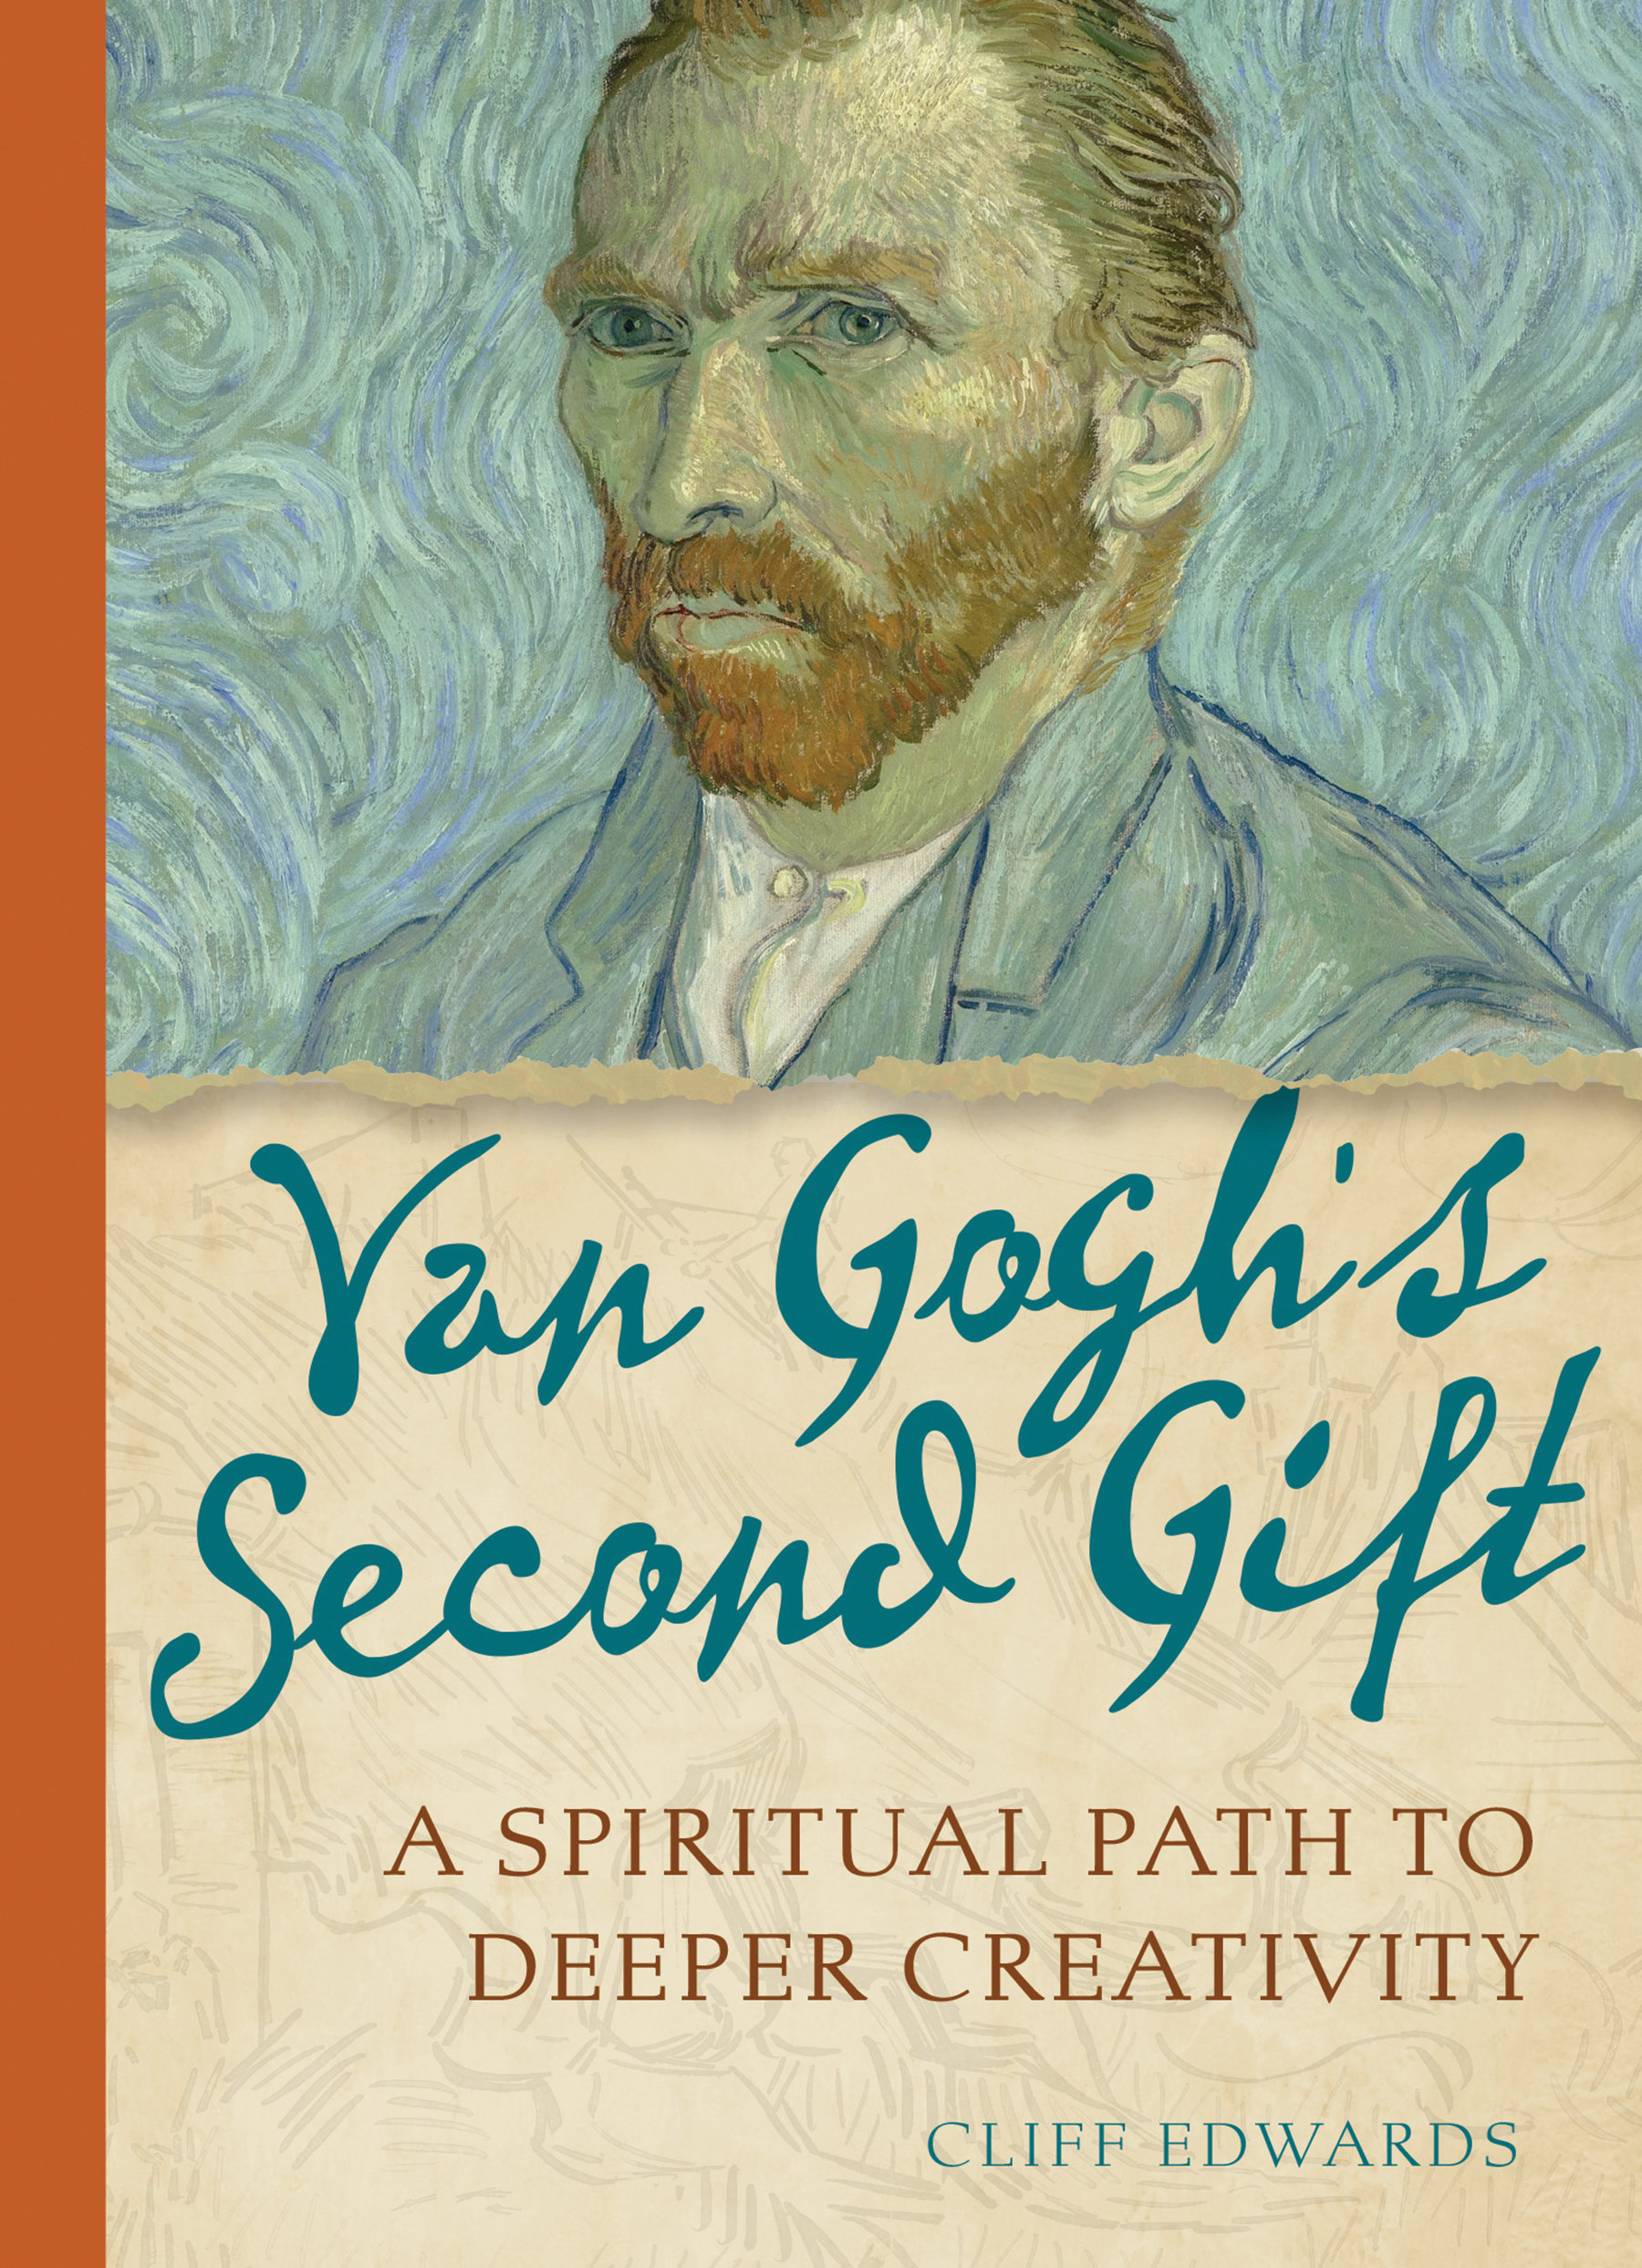 Van Gogh's Second Gift: A Spiritual Path to Deeper Creativity